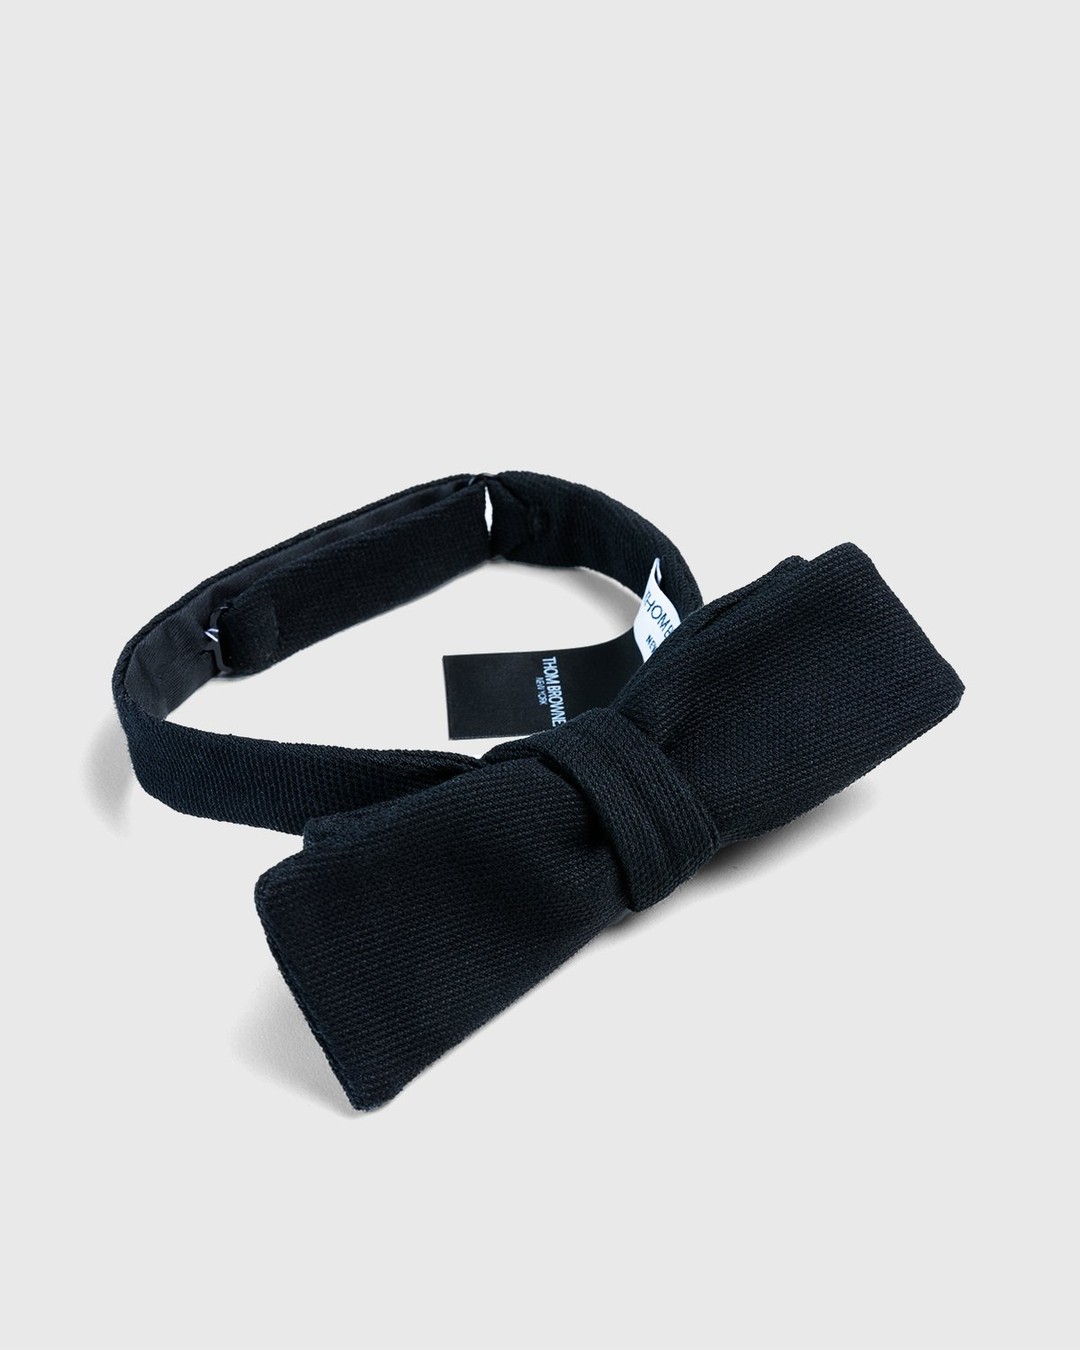 Thom Browne x Highsnobiety – Classic Bow Tie Black - Ties - Black - Image 1